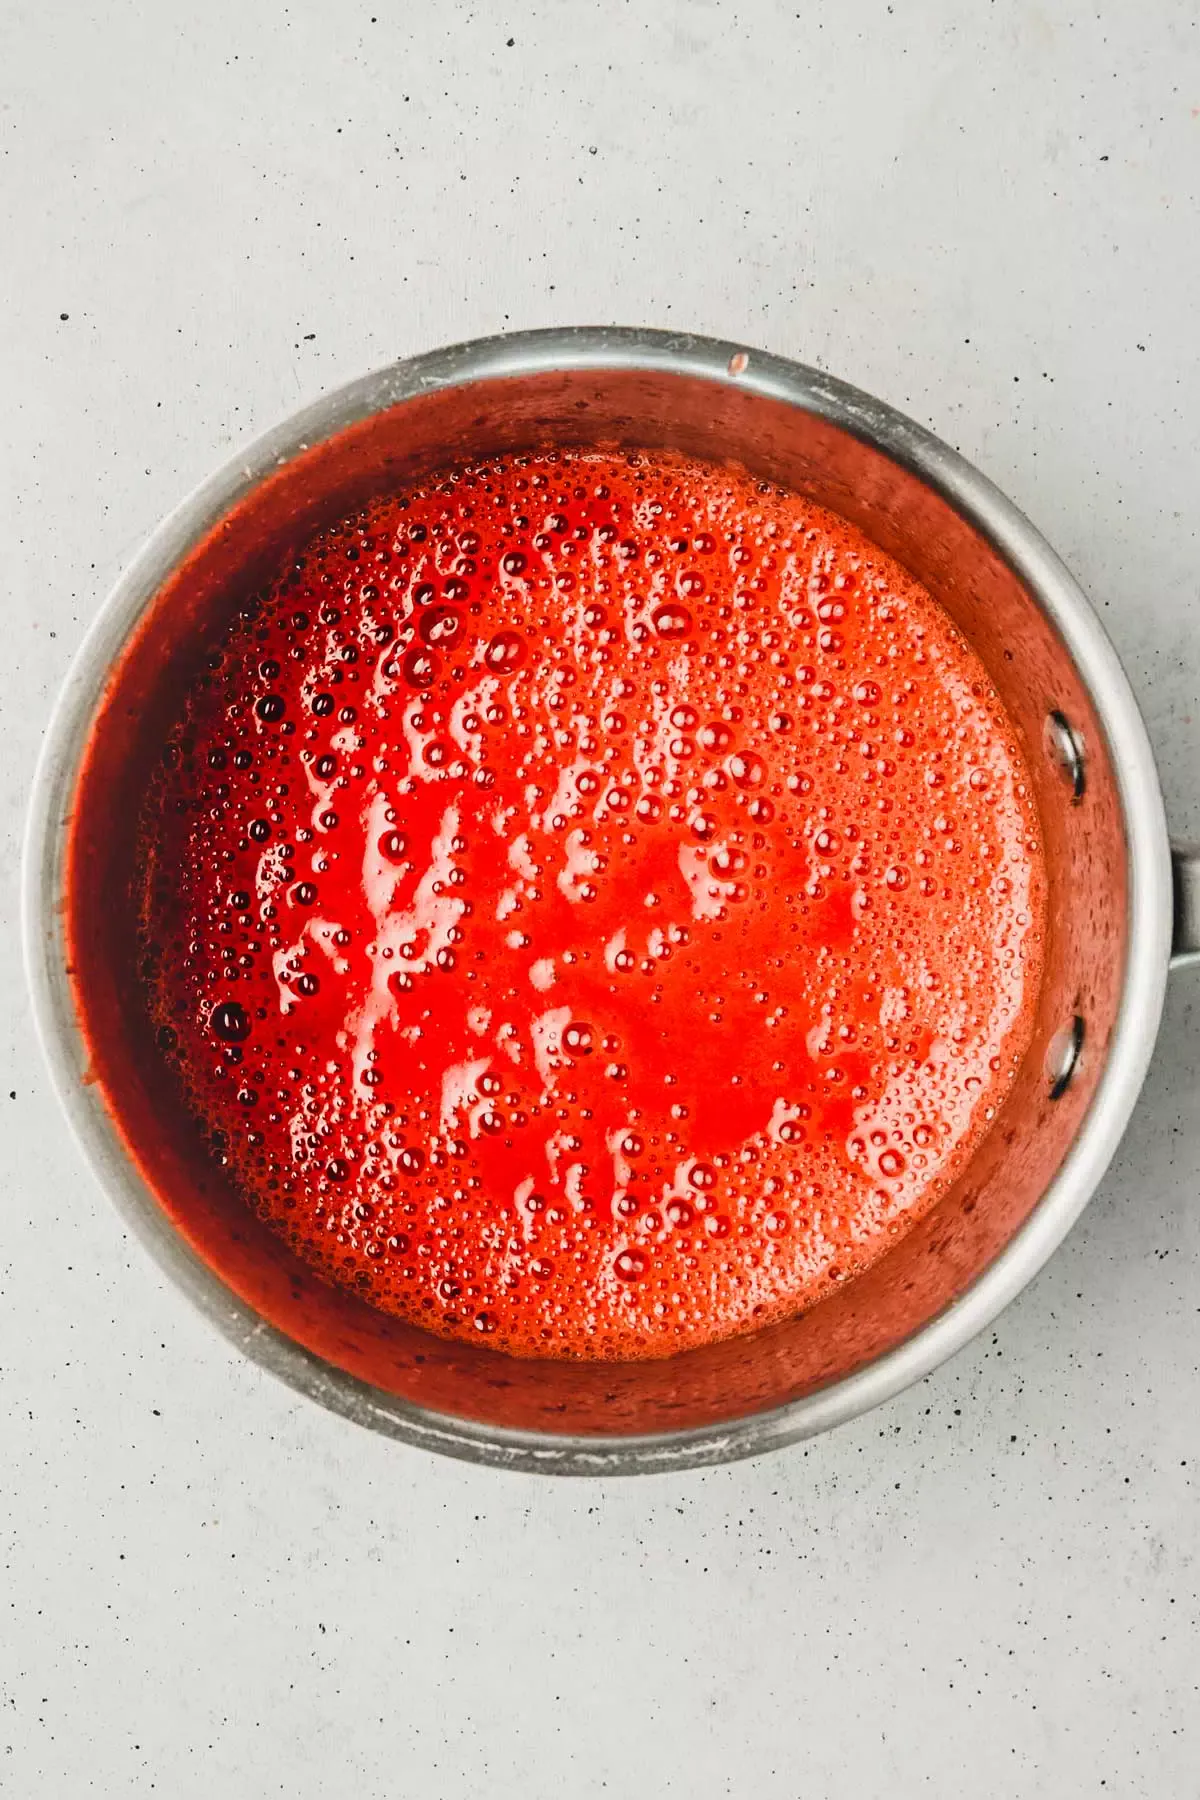 Sauce pan with strawberries sauce